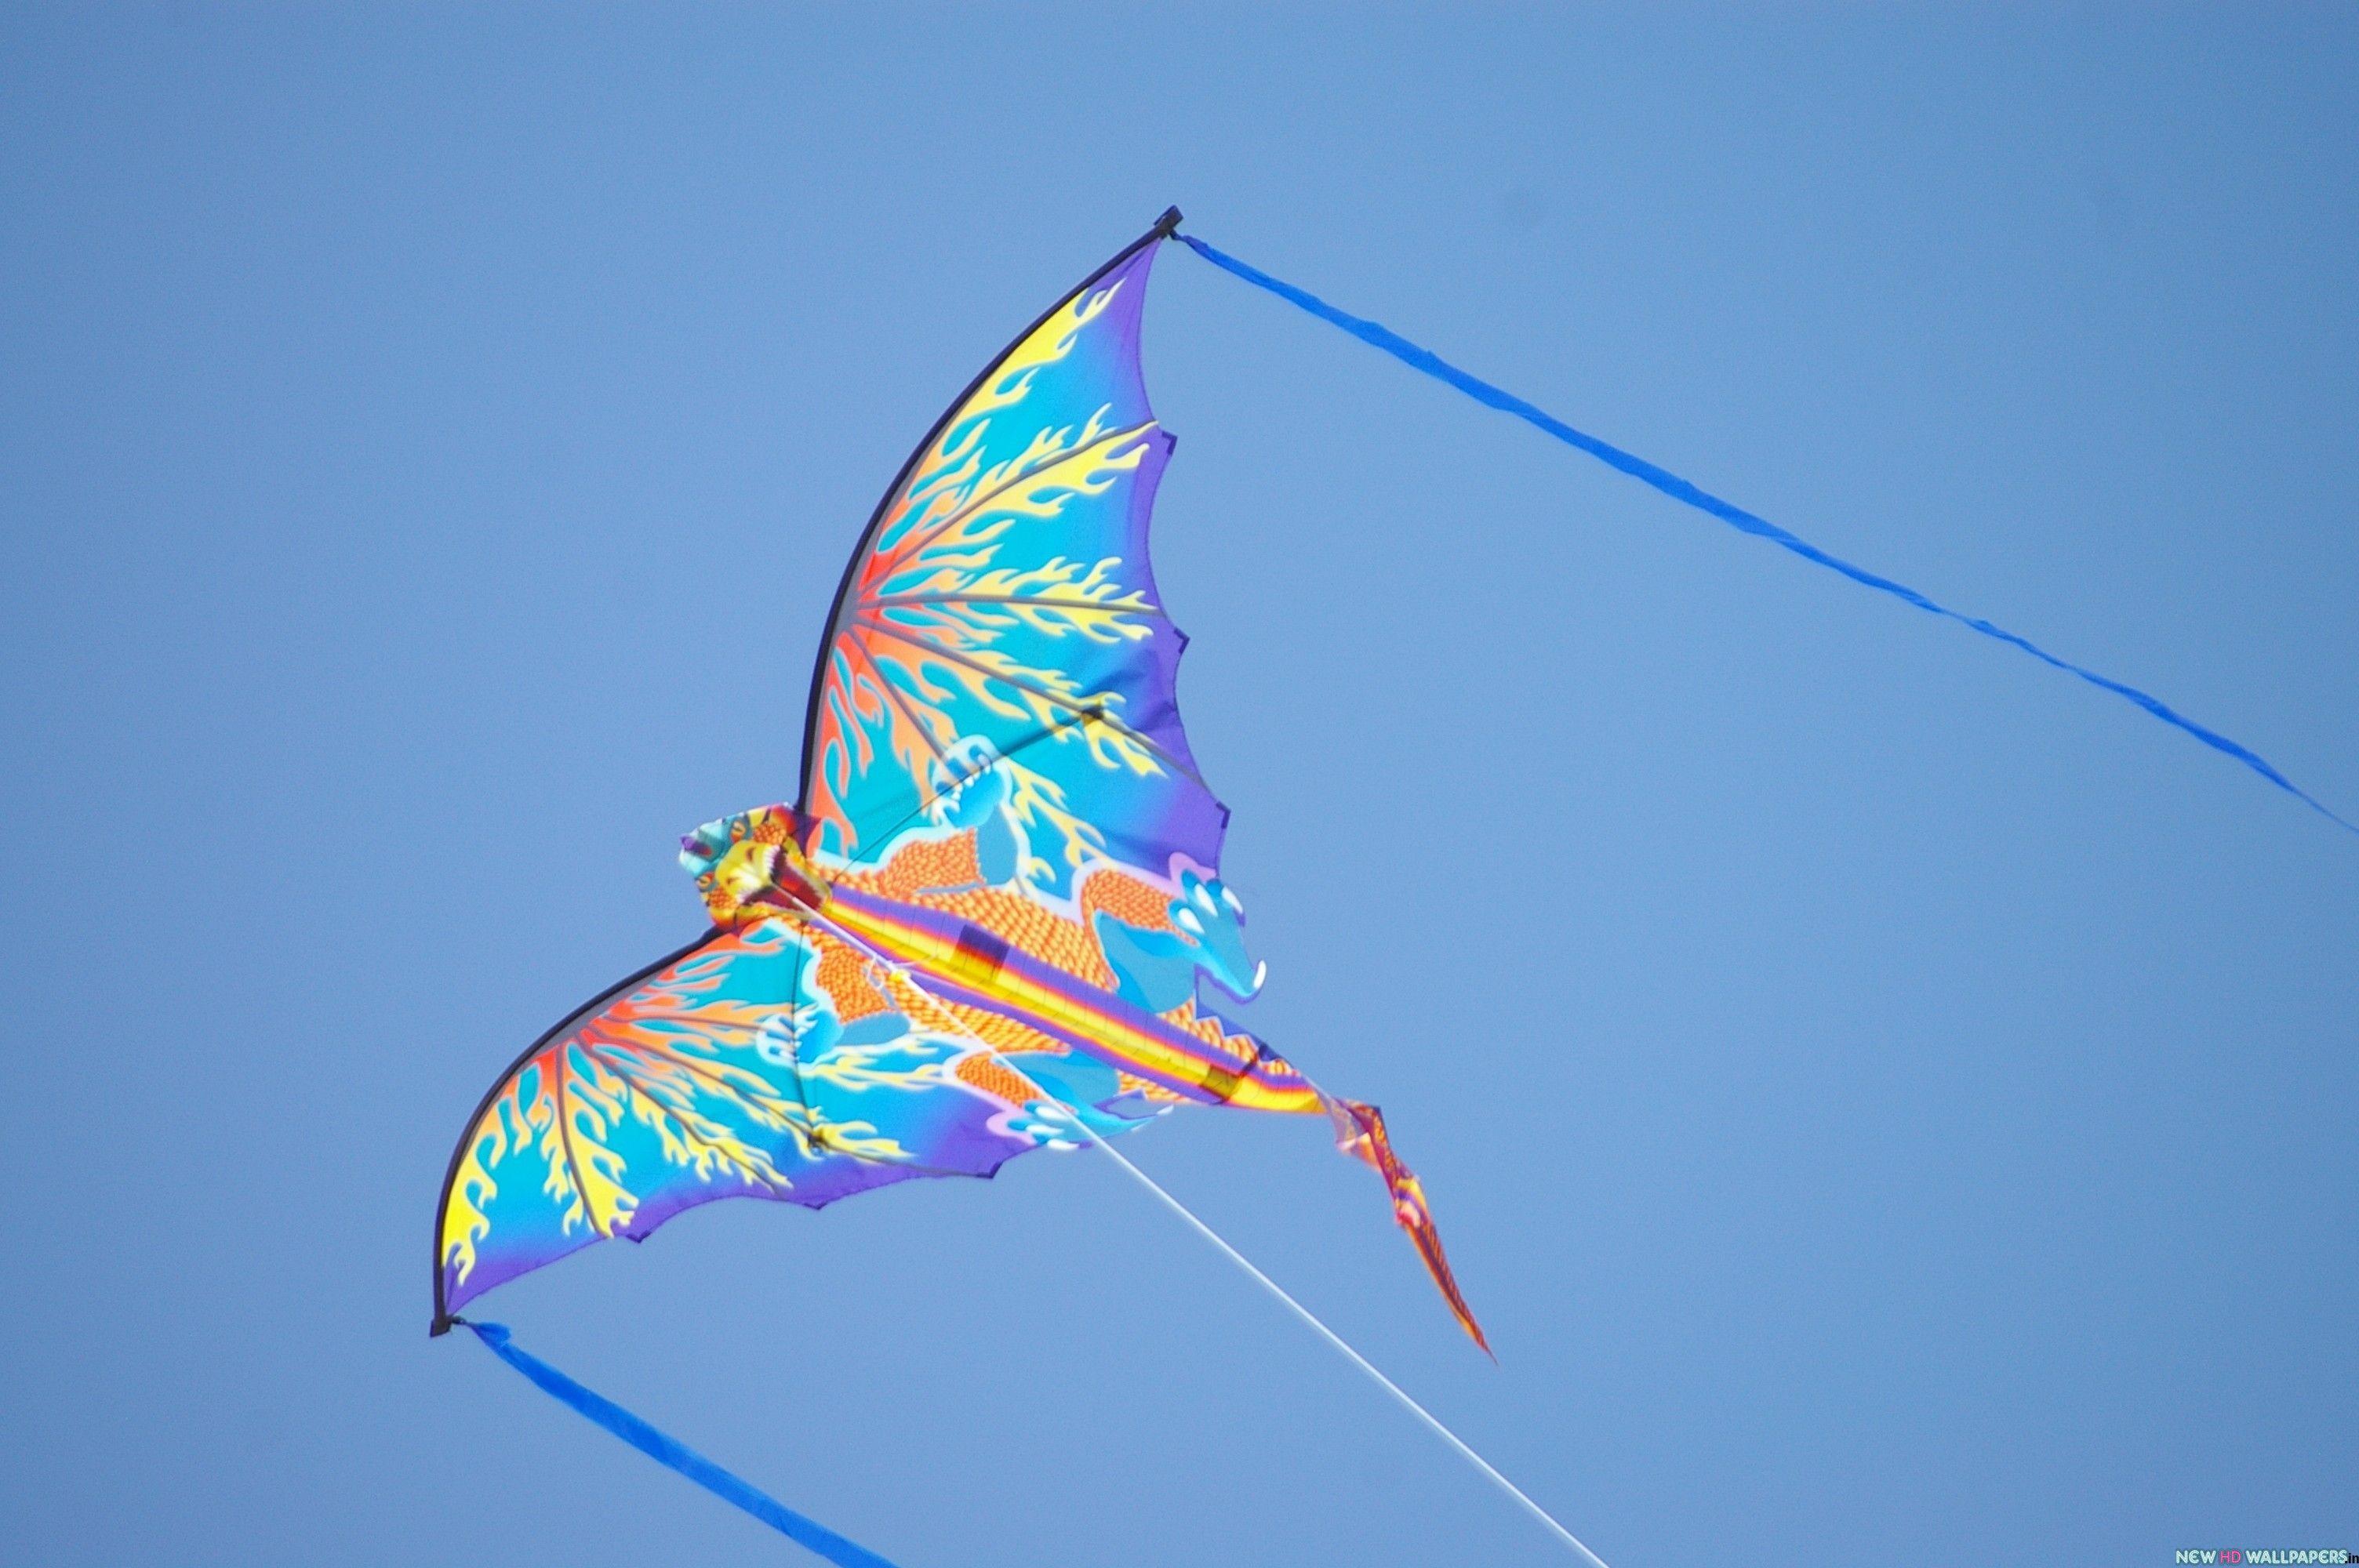 Kite WallpaperUSkY.com